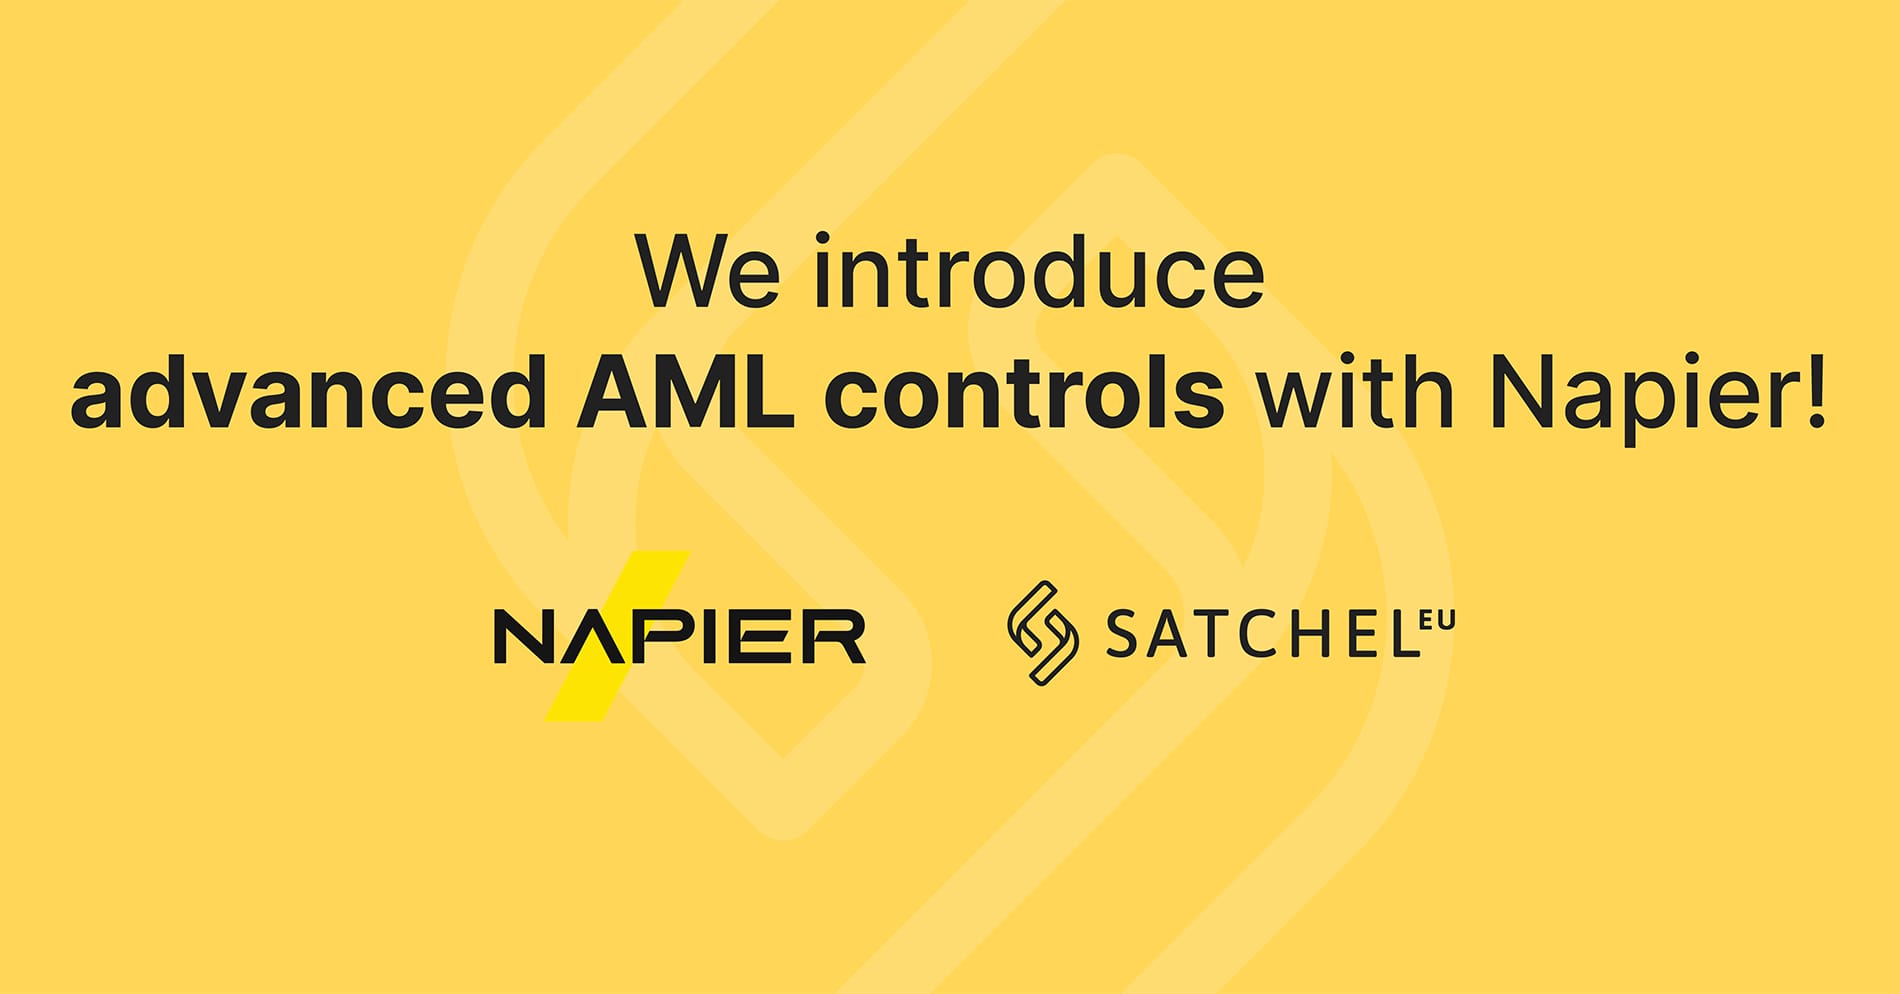 Satchel introduces advanced AML controls with Napier